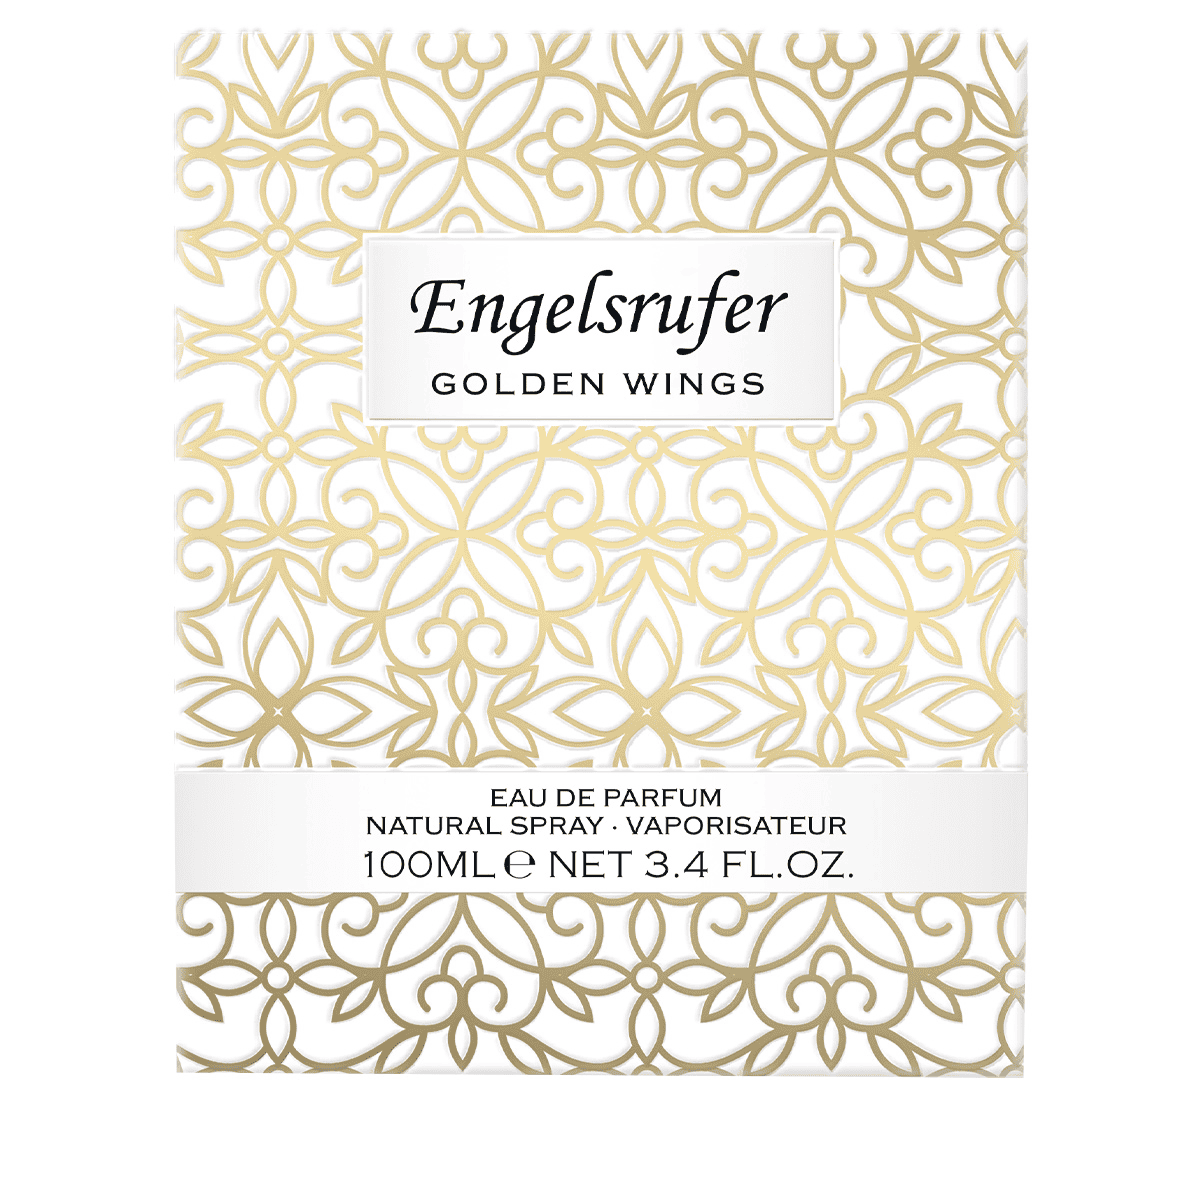 Engelsrufer - Golden Wings • de Parfum Eau Natural Spray